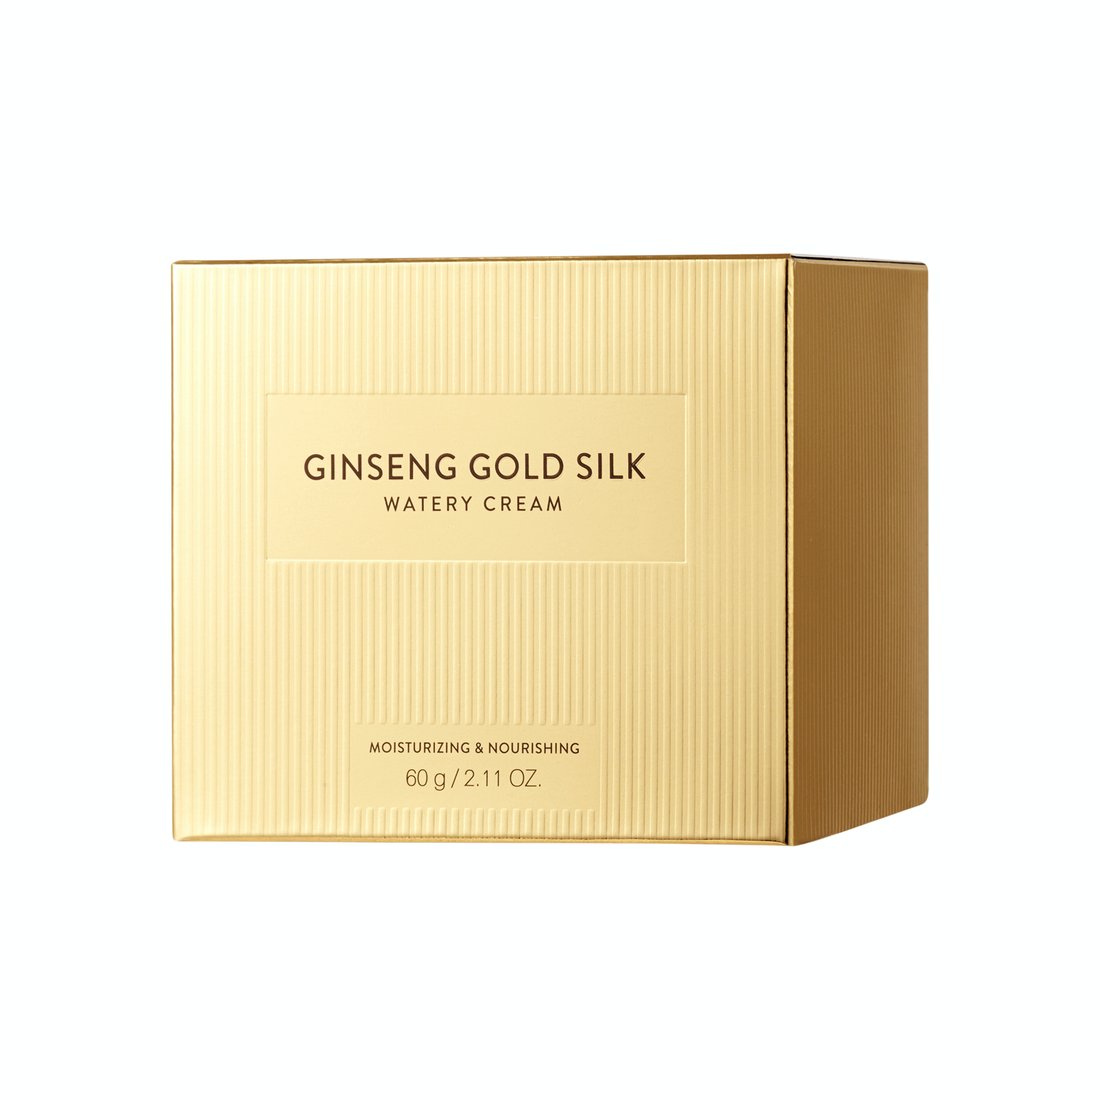 [THE BEGINNING OF A GOLDEN MIRACLE] Ginseng Gold Silk Watery Cream